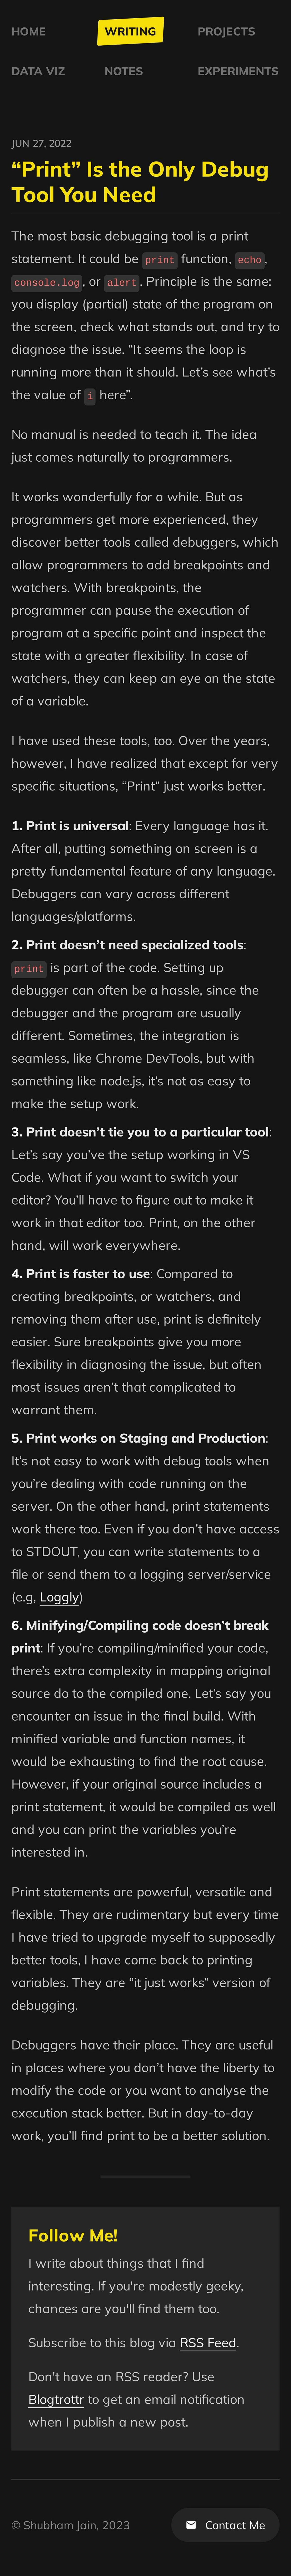 “Print” Is the Only Debug Tool You Need